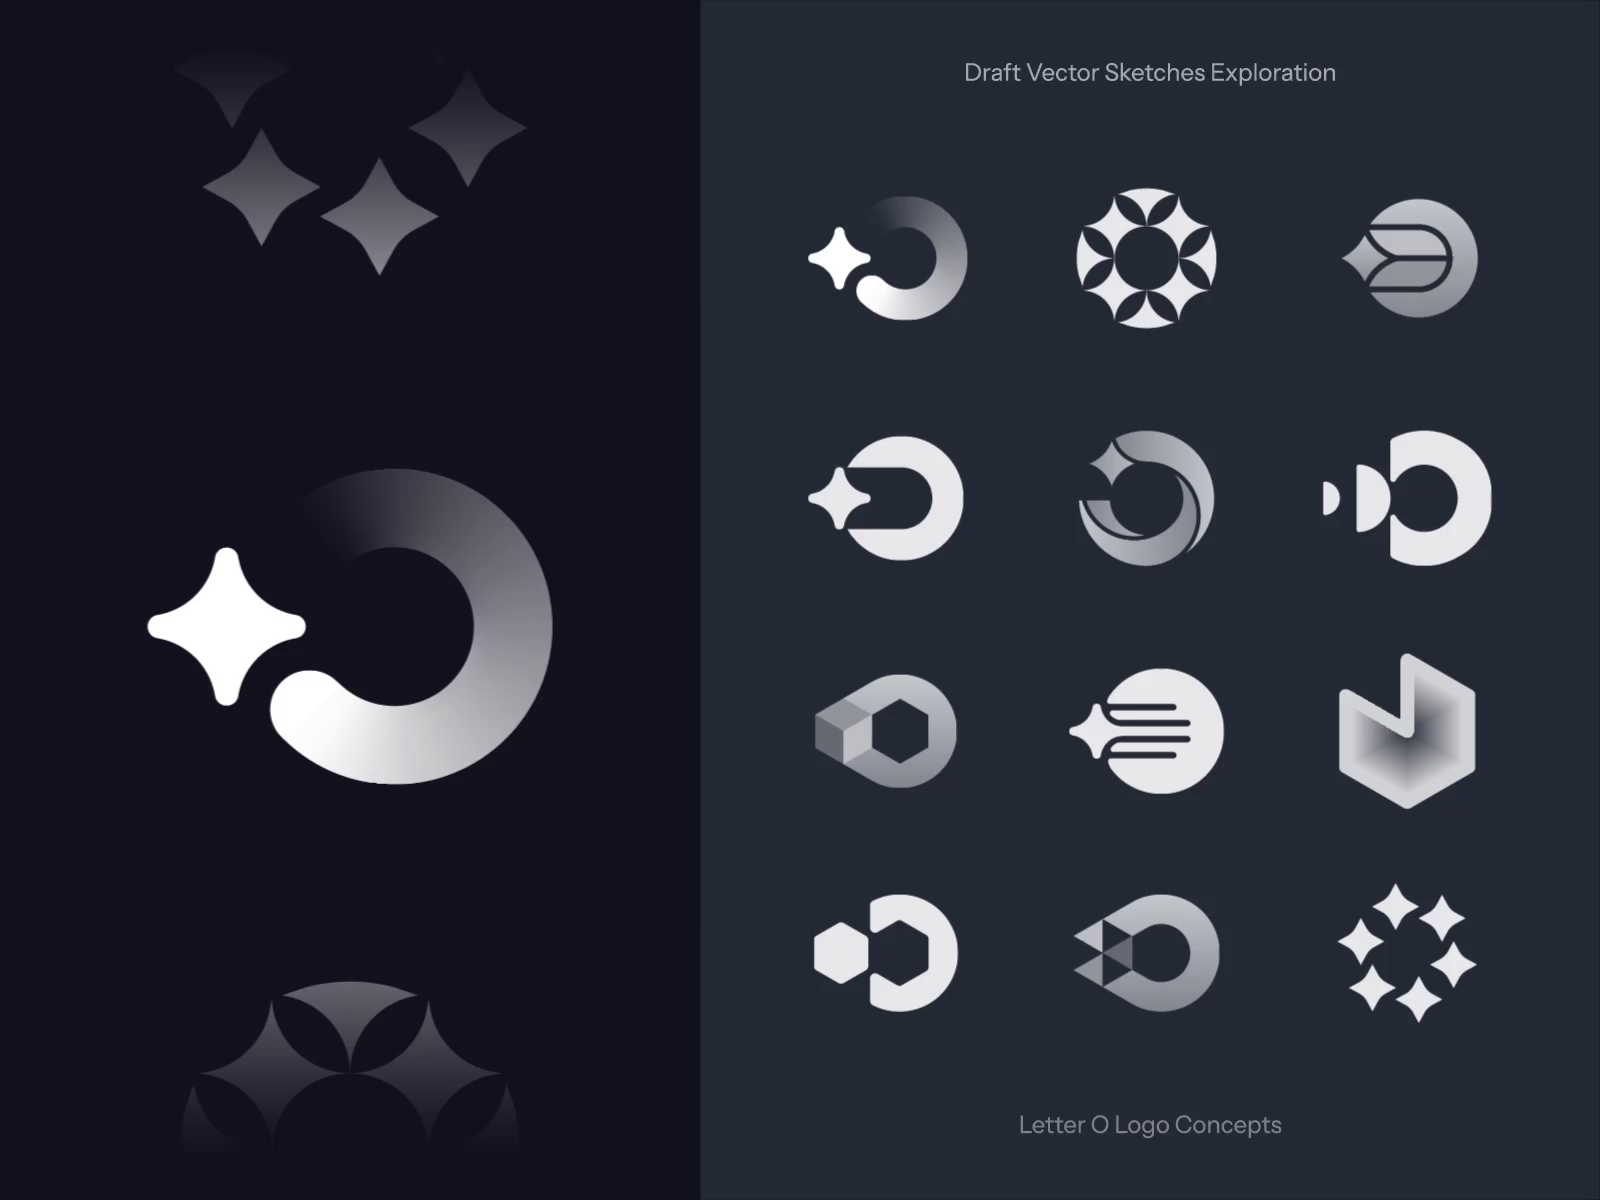 Letter O Logo Shapes Exploration by Dmitry Lepisov on Dribbble